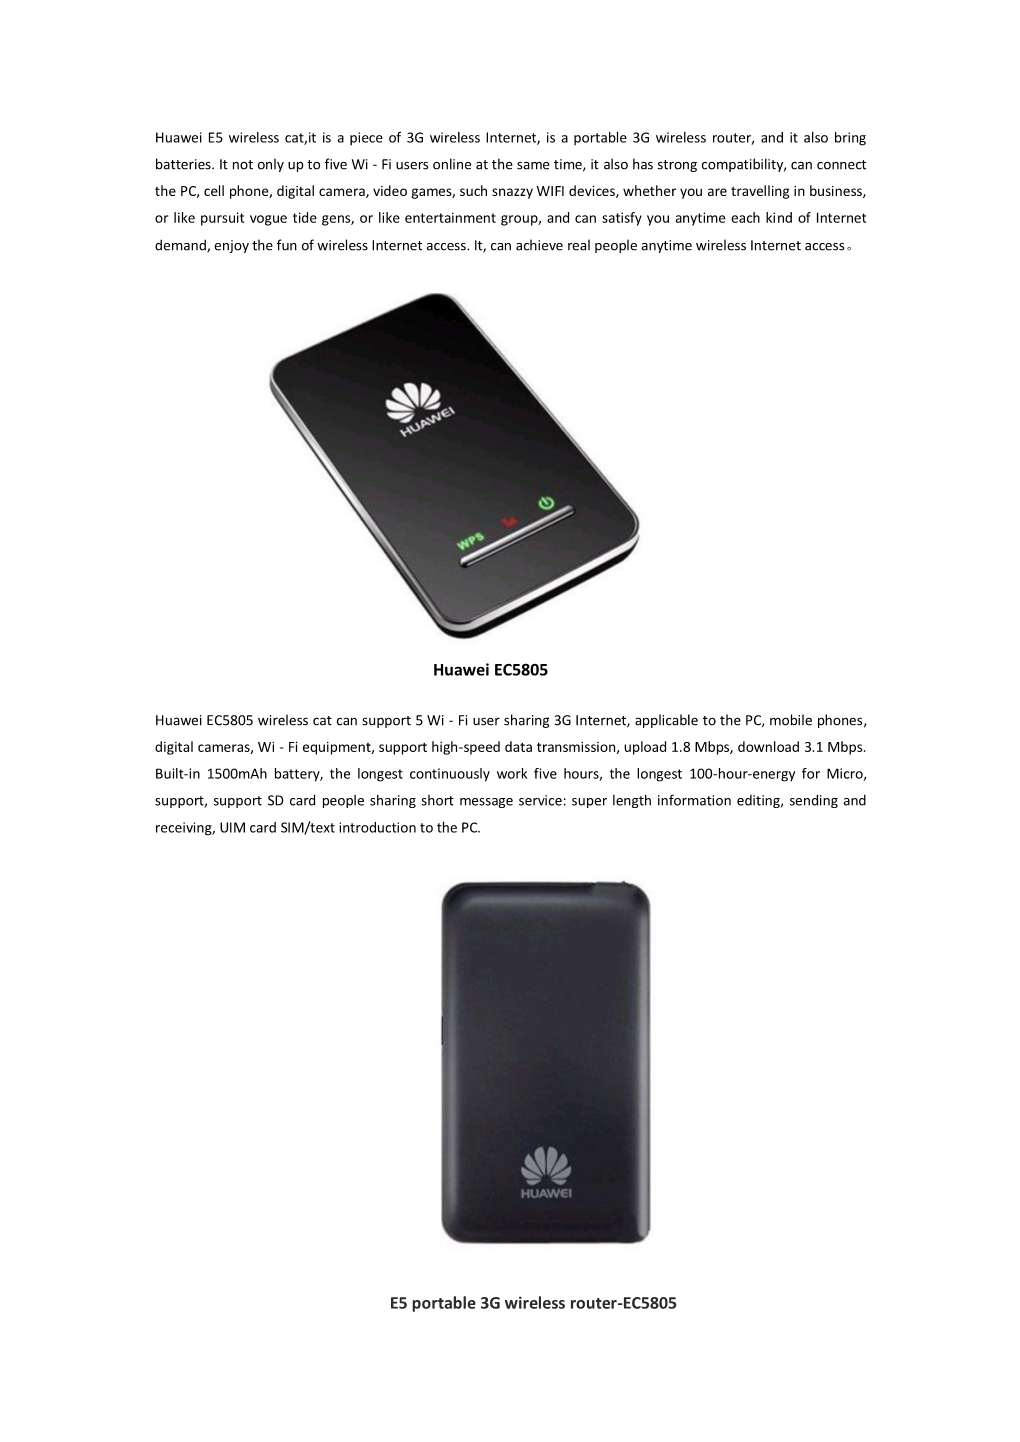 Huawei EC5805 E5 Portable 3G Wireless Router-EC5805